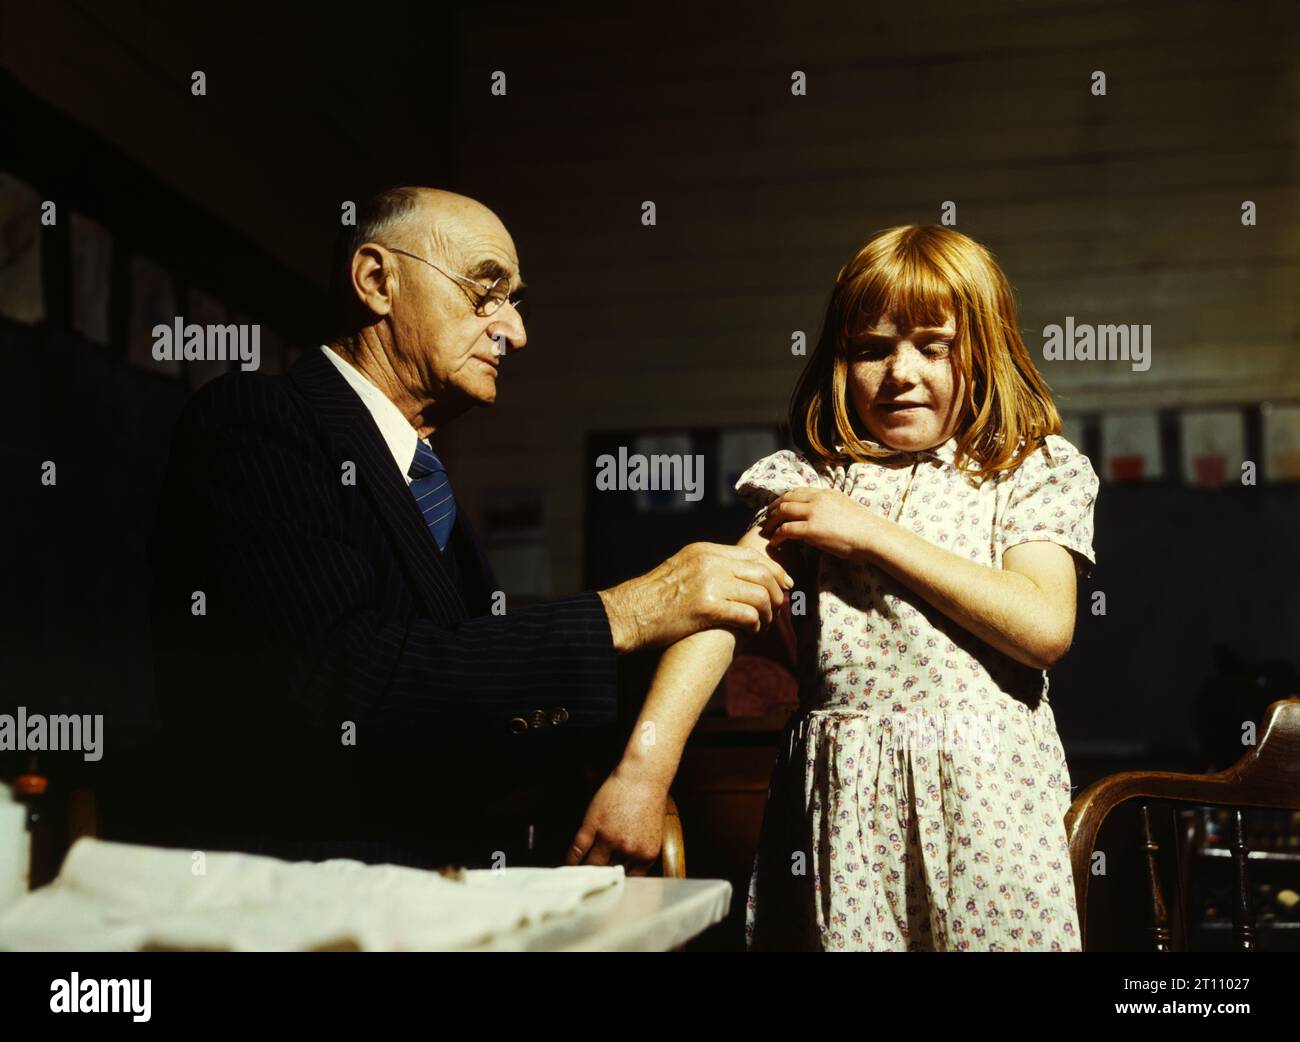 John Vachon : Dr Schreiber inoculant la typhoïde, San Augustine, Texas, 1943 Dr Schreiber de San Augustine inoculant la typhoïde dans une école rurale du comté de San Augustine, Texas. Banque D'Images